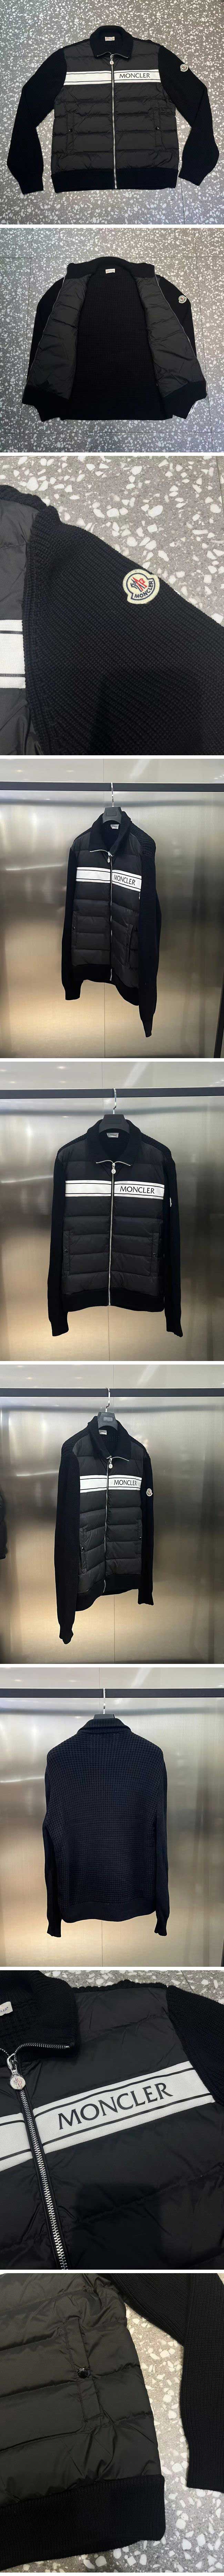 Moncler Zip-up Jacket モンクレール ジップアップ ジャケット ブラック